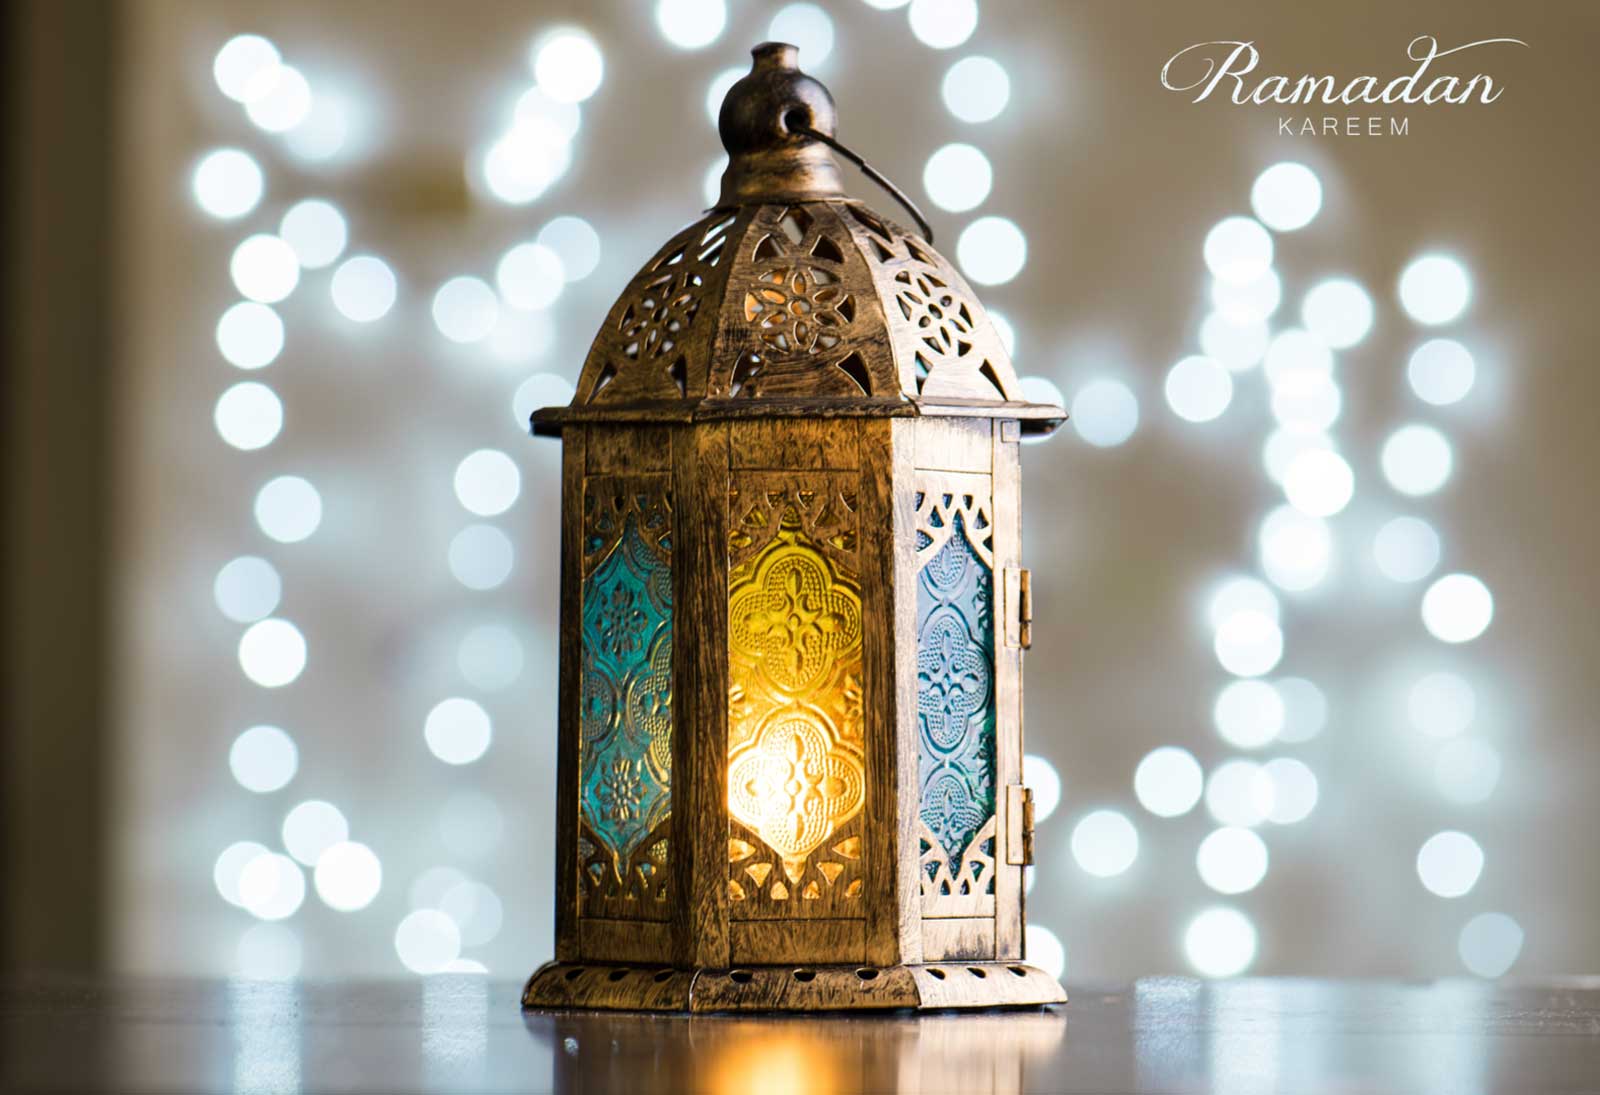 Ramadan Reflections